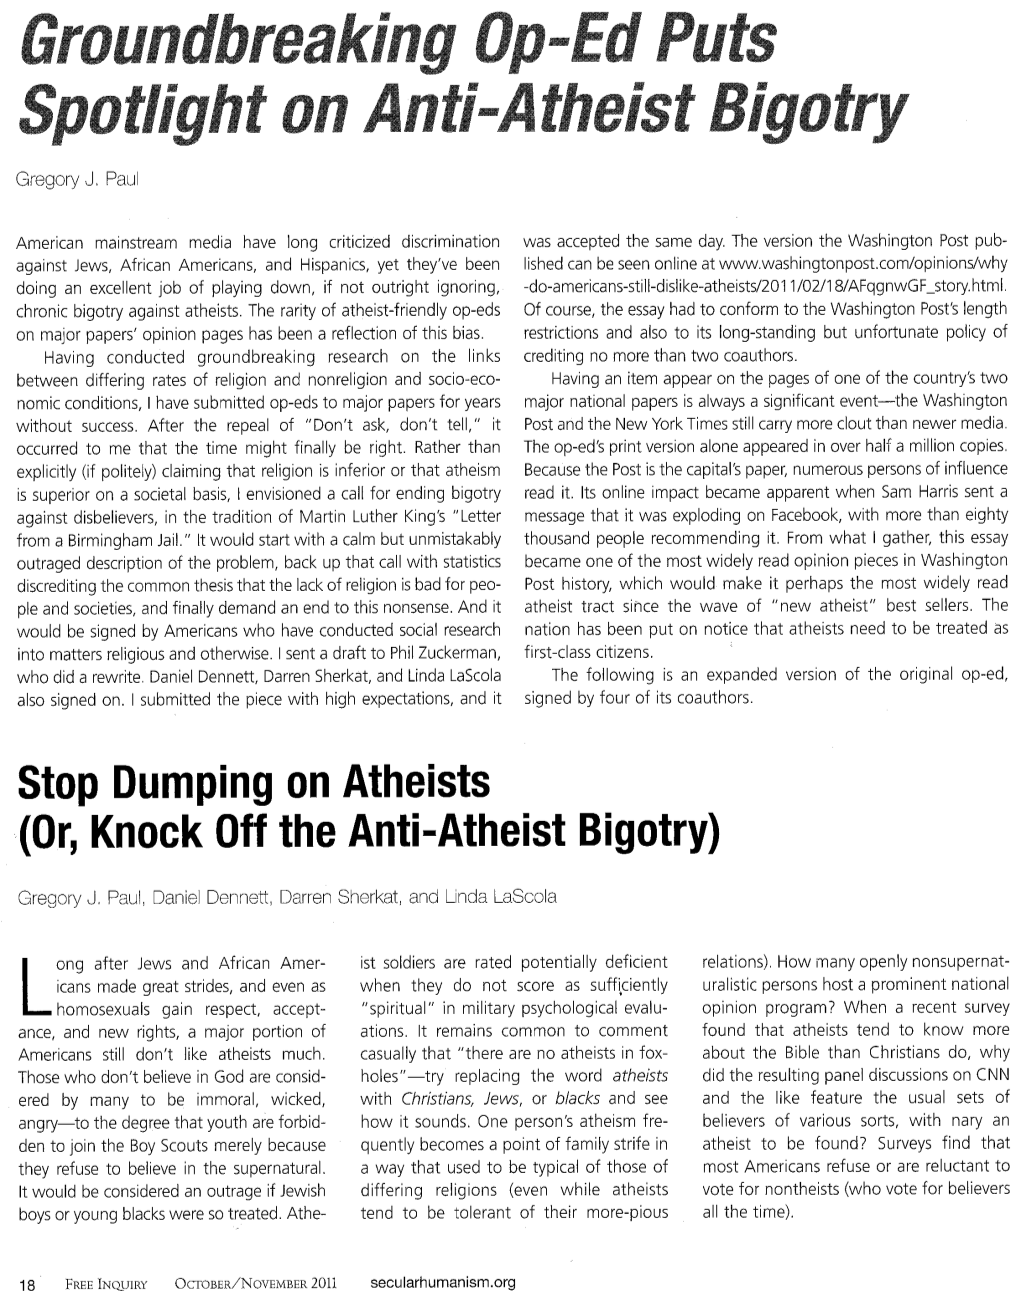 Stop Dumping on Atheists (Or,Knock Off the Anti-Atheist Bigotry)